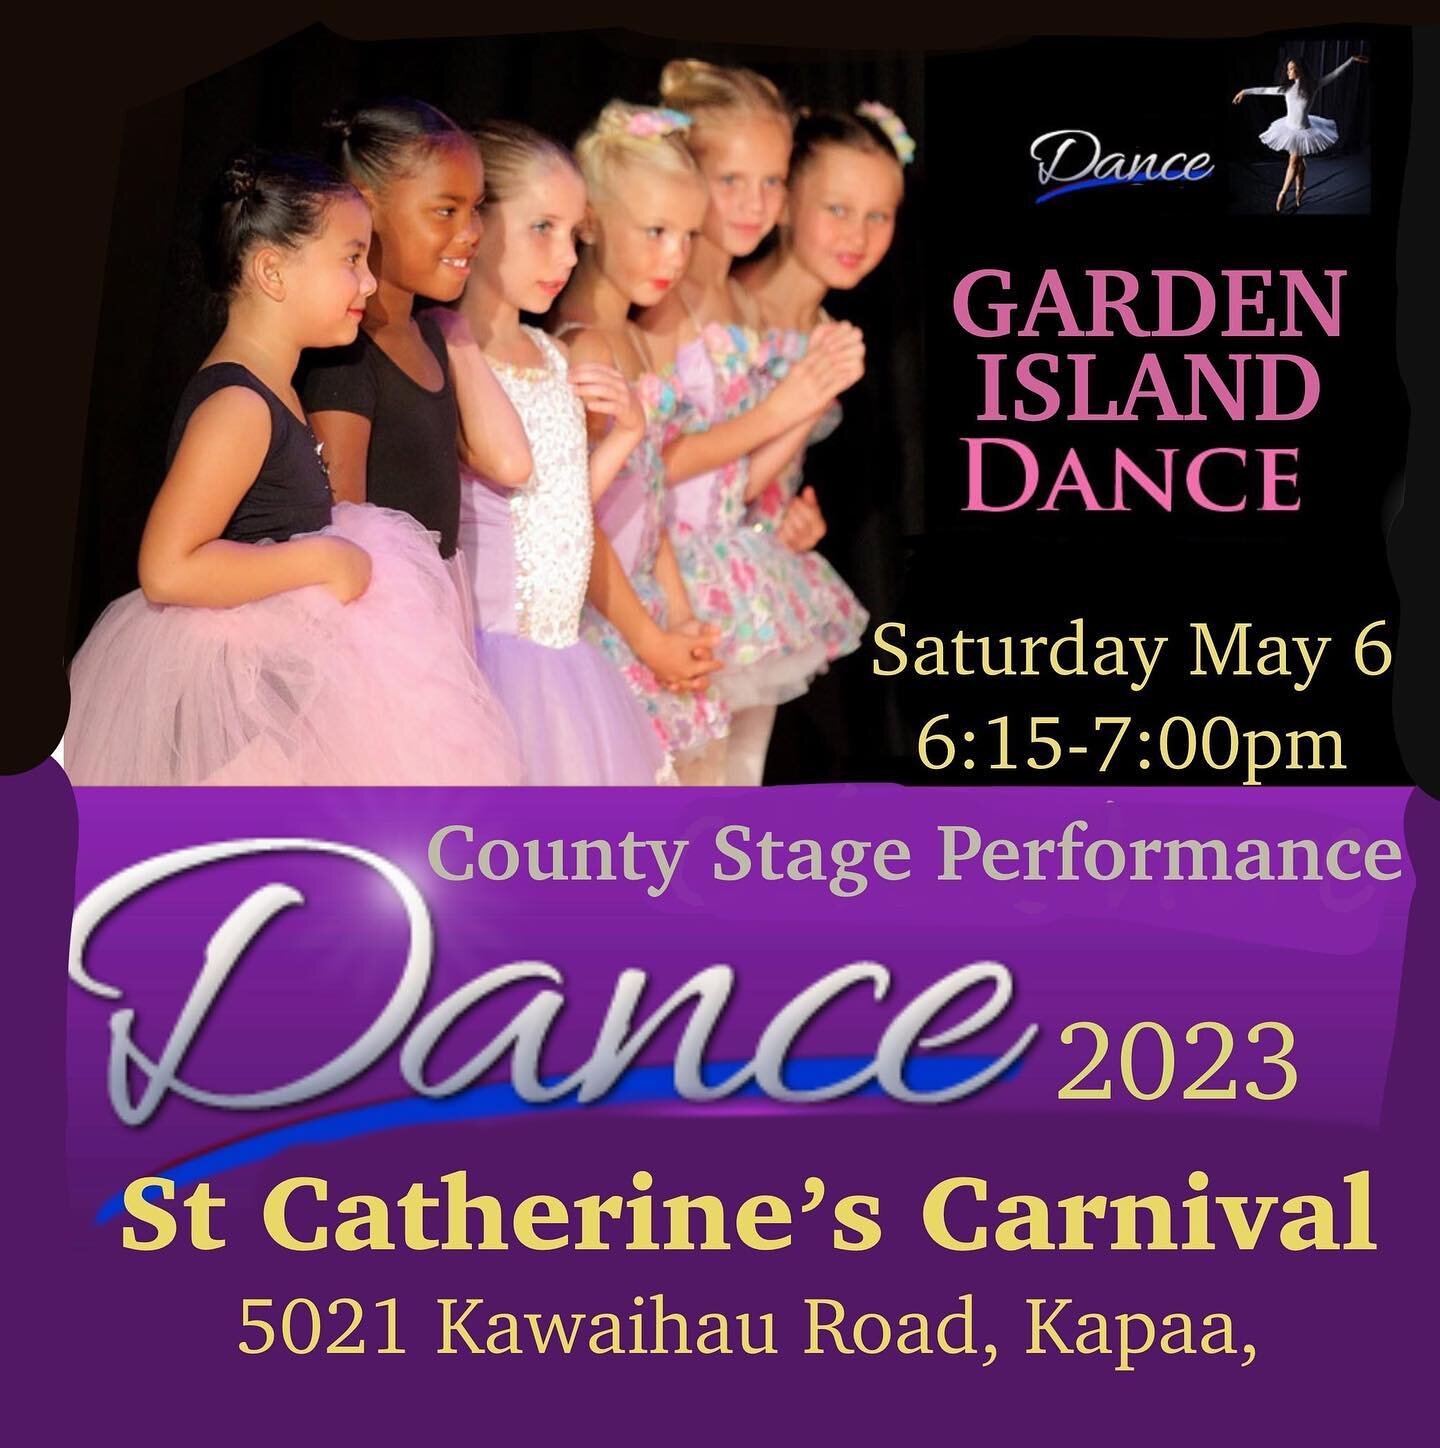 Come and join us for a night of fun❤️❤️❤️

#carnival 
#stcatherinekauai
#catholicschool
#privateschool
#education
#faith
#service
#hawaiicatholicschools